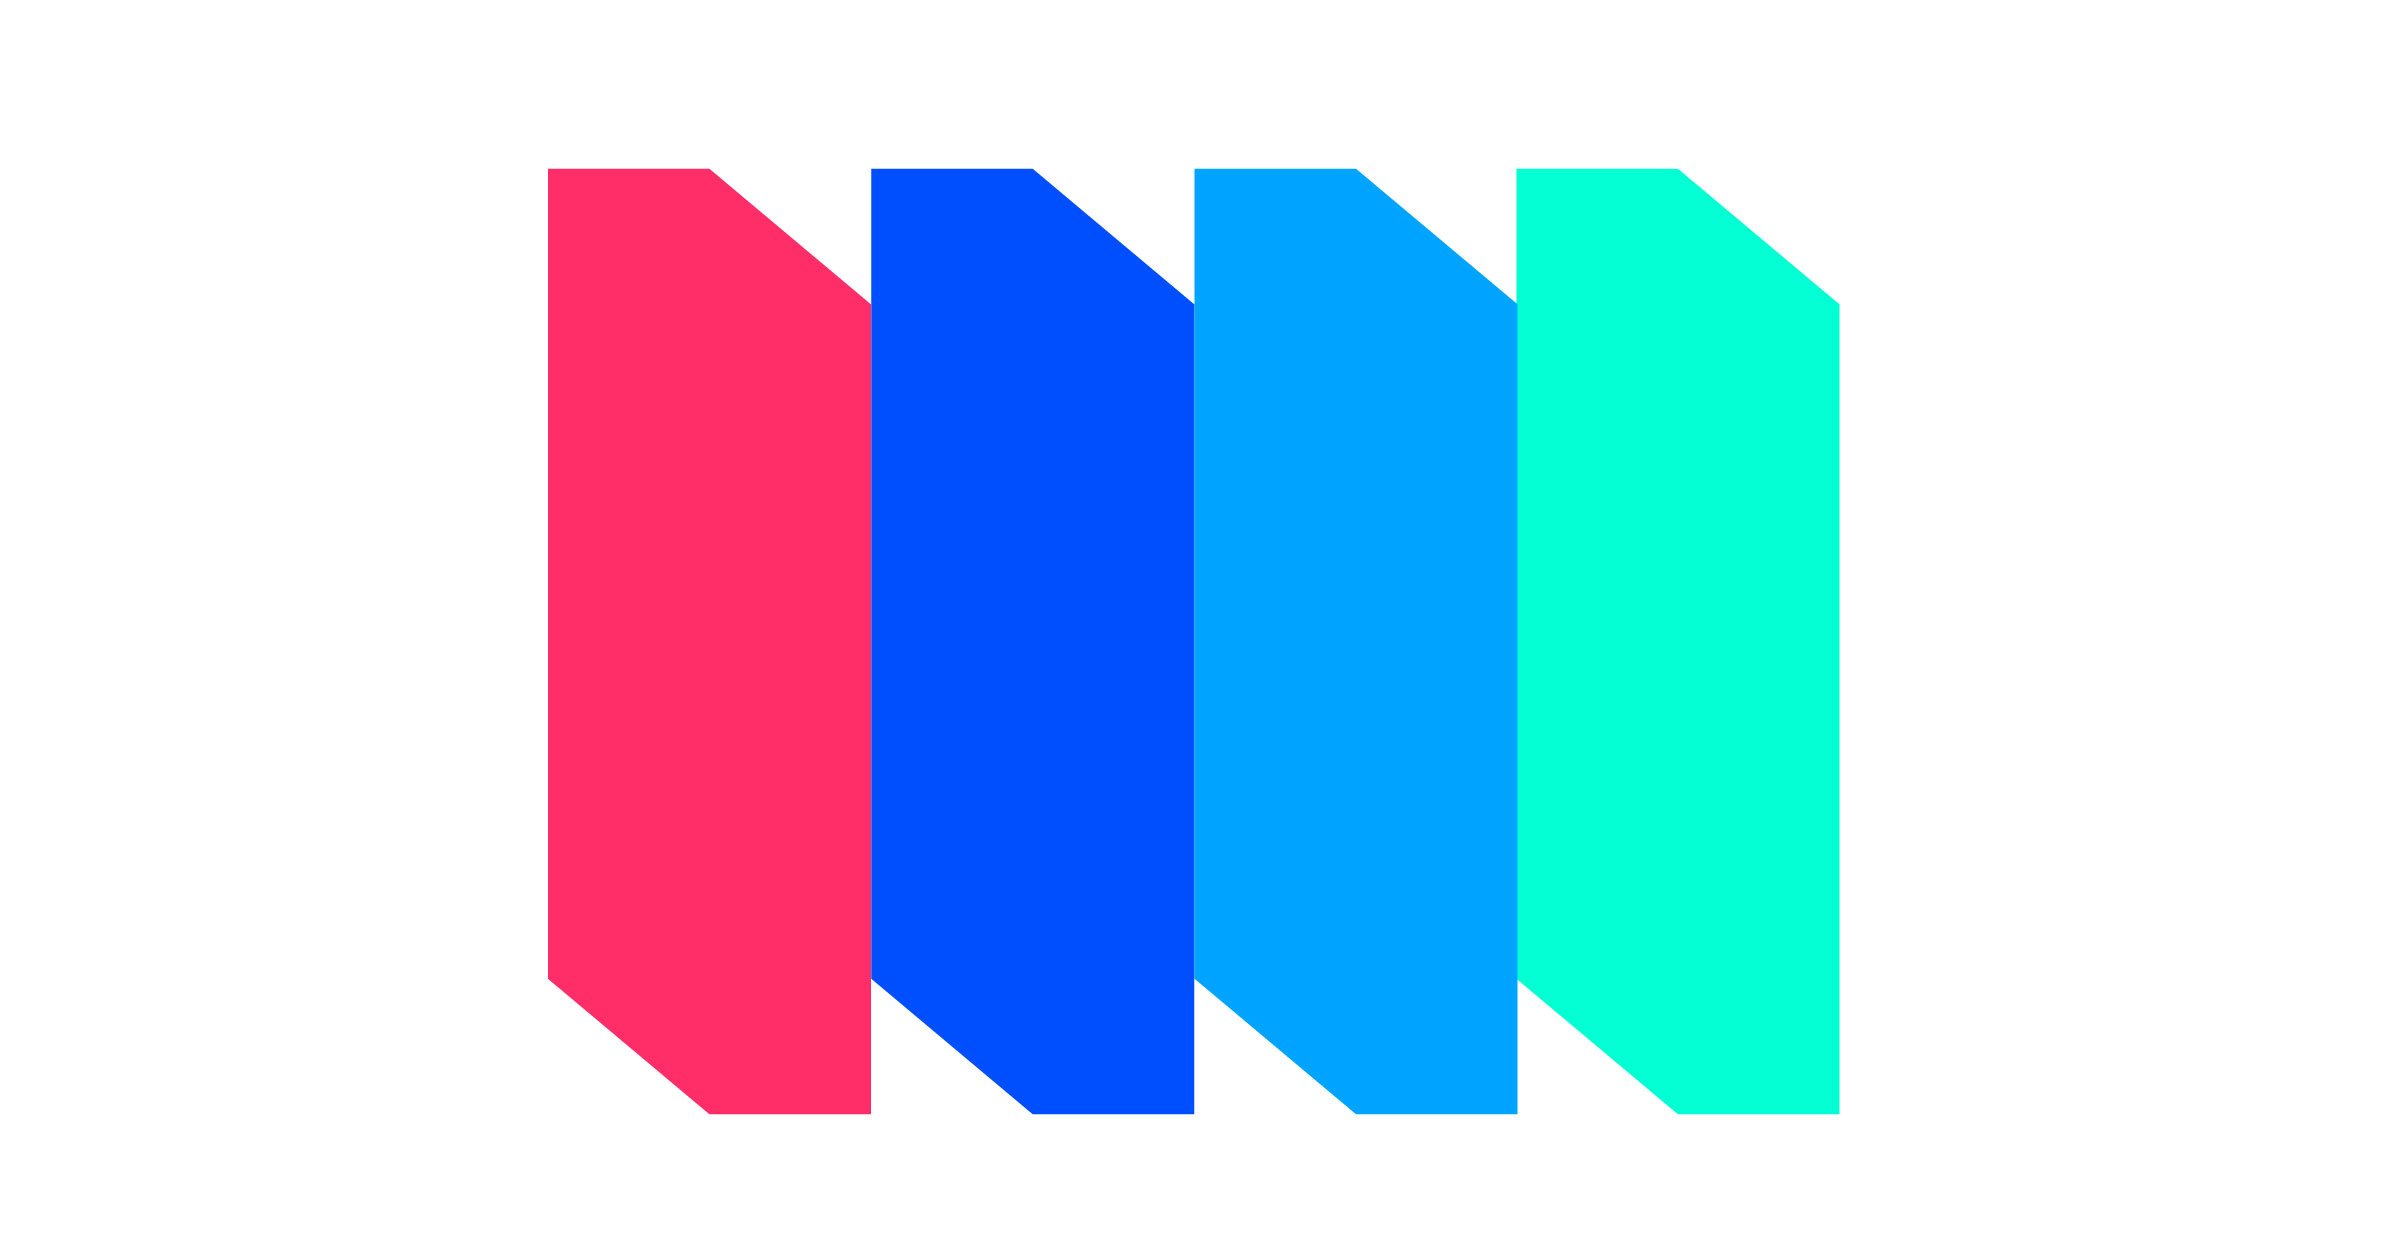 Illustration four coloured blocks